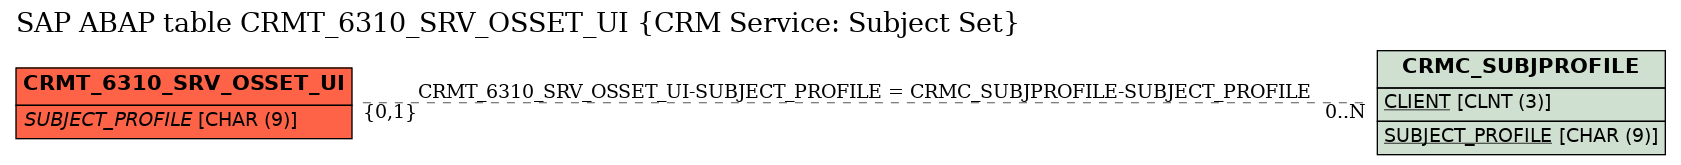 E-R Diagram for table CRMT_6310_SRV_OSSET_UI (CRM Service: Subject Set)